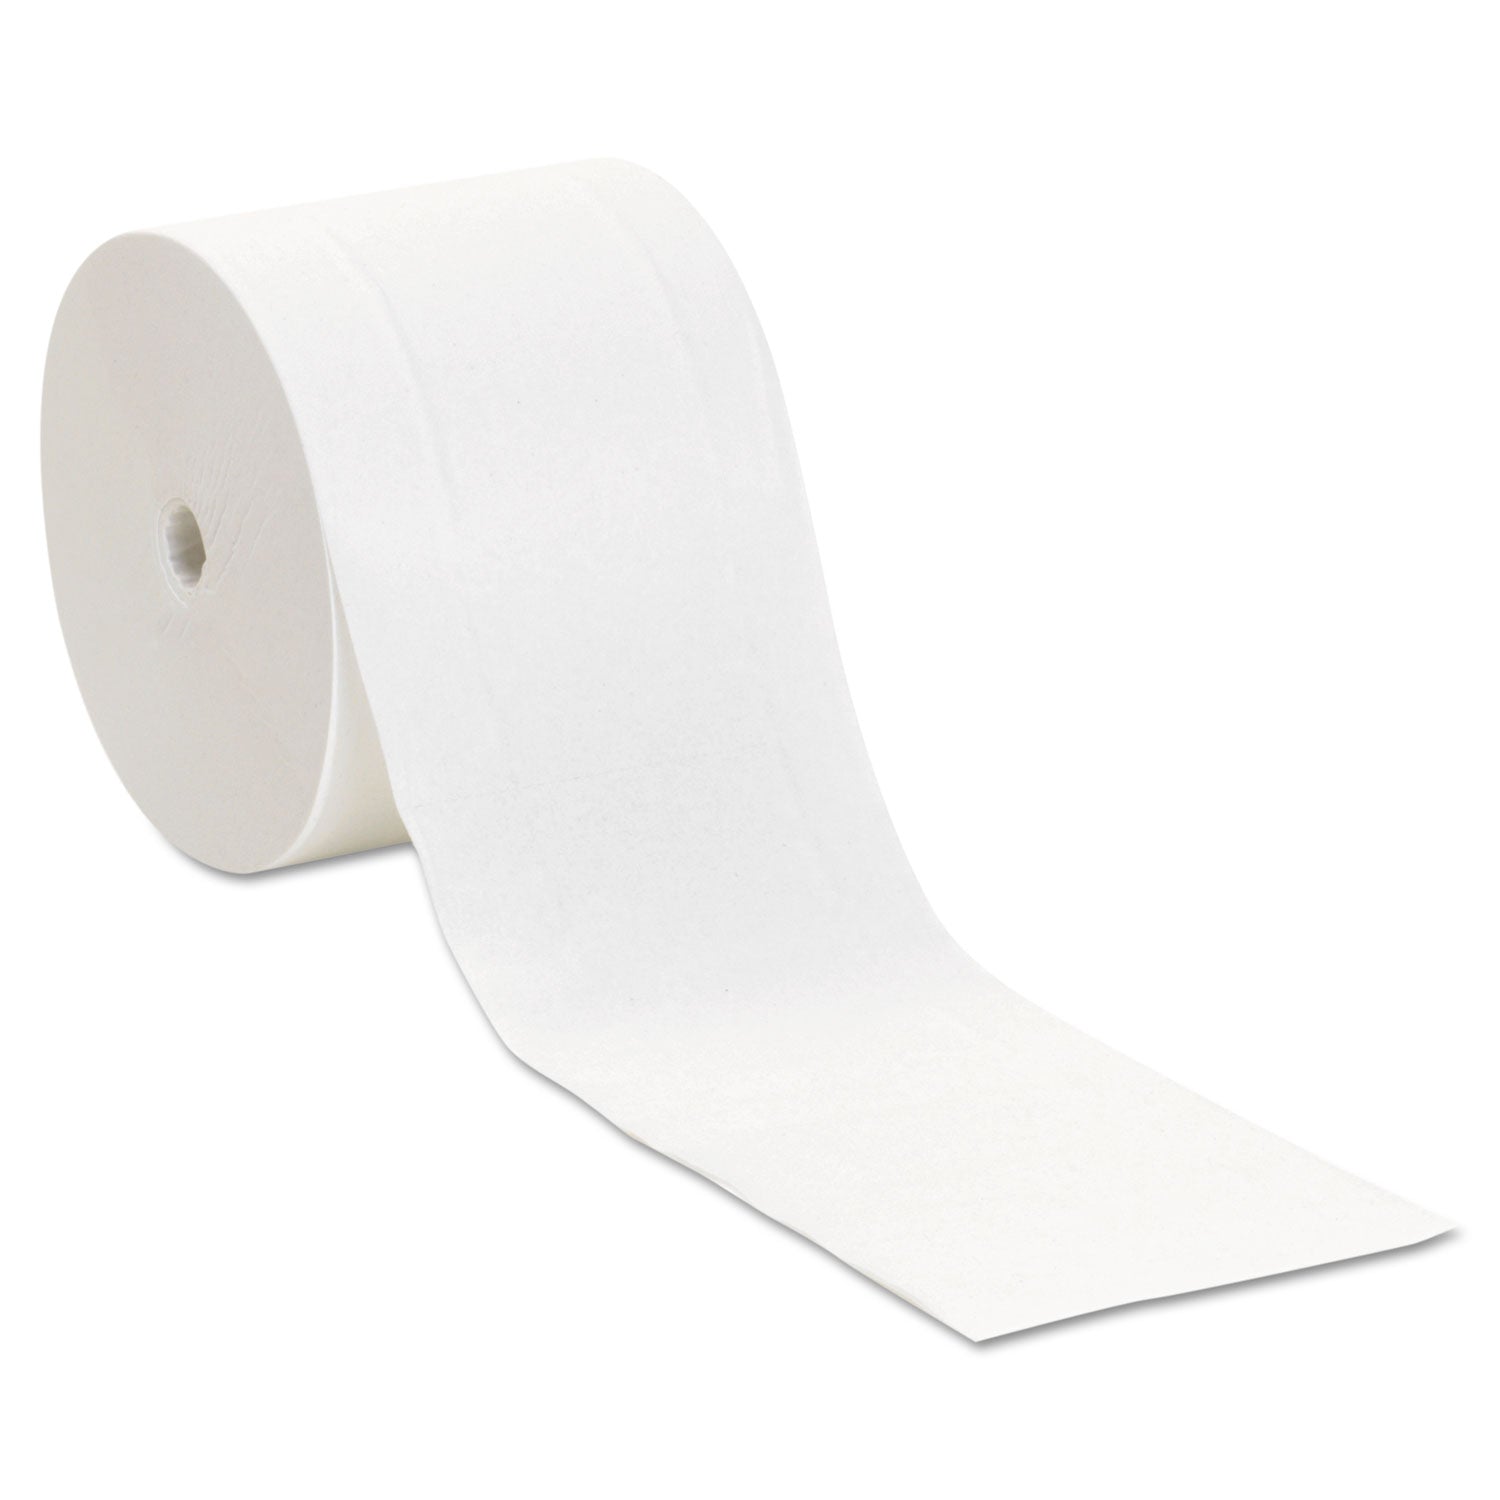 Coreless Bath Tissue, Septic Safe, 2-Ply, White, 1,000 Sheets/Roll, 36 Rolls/Carton - 